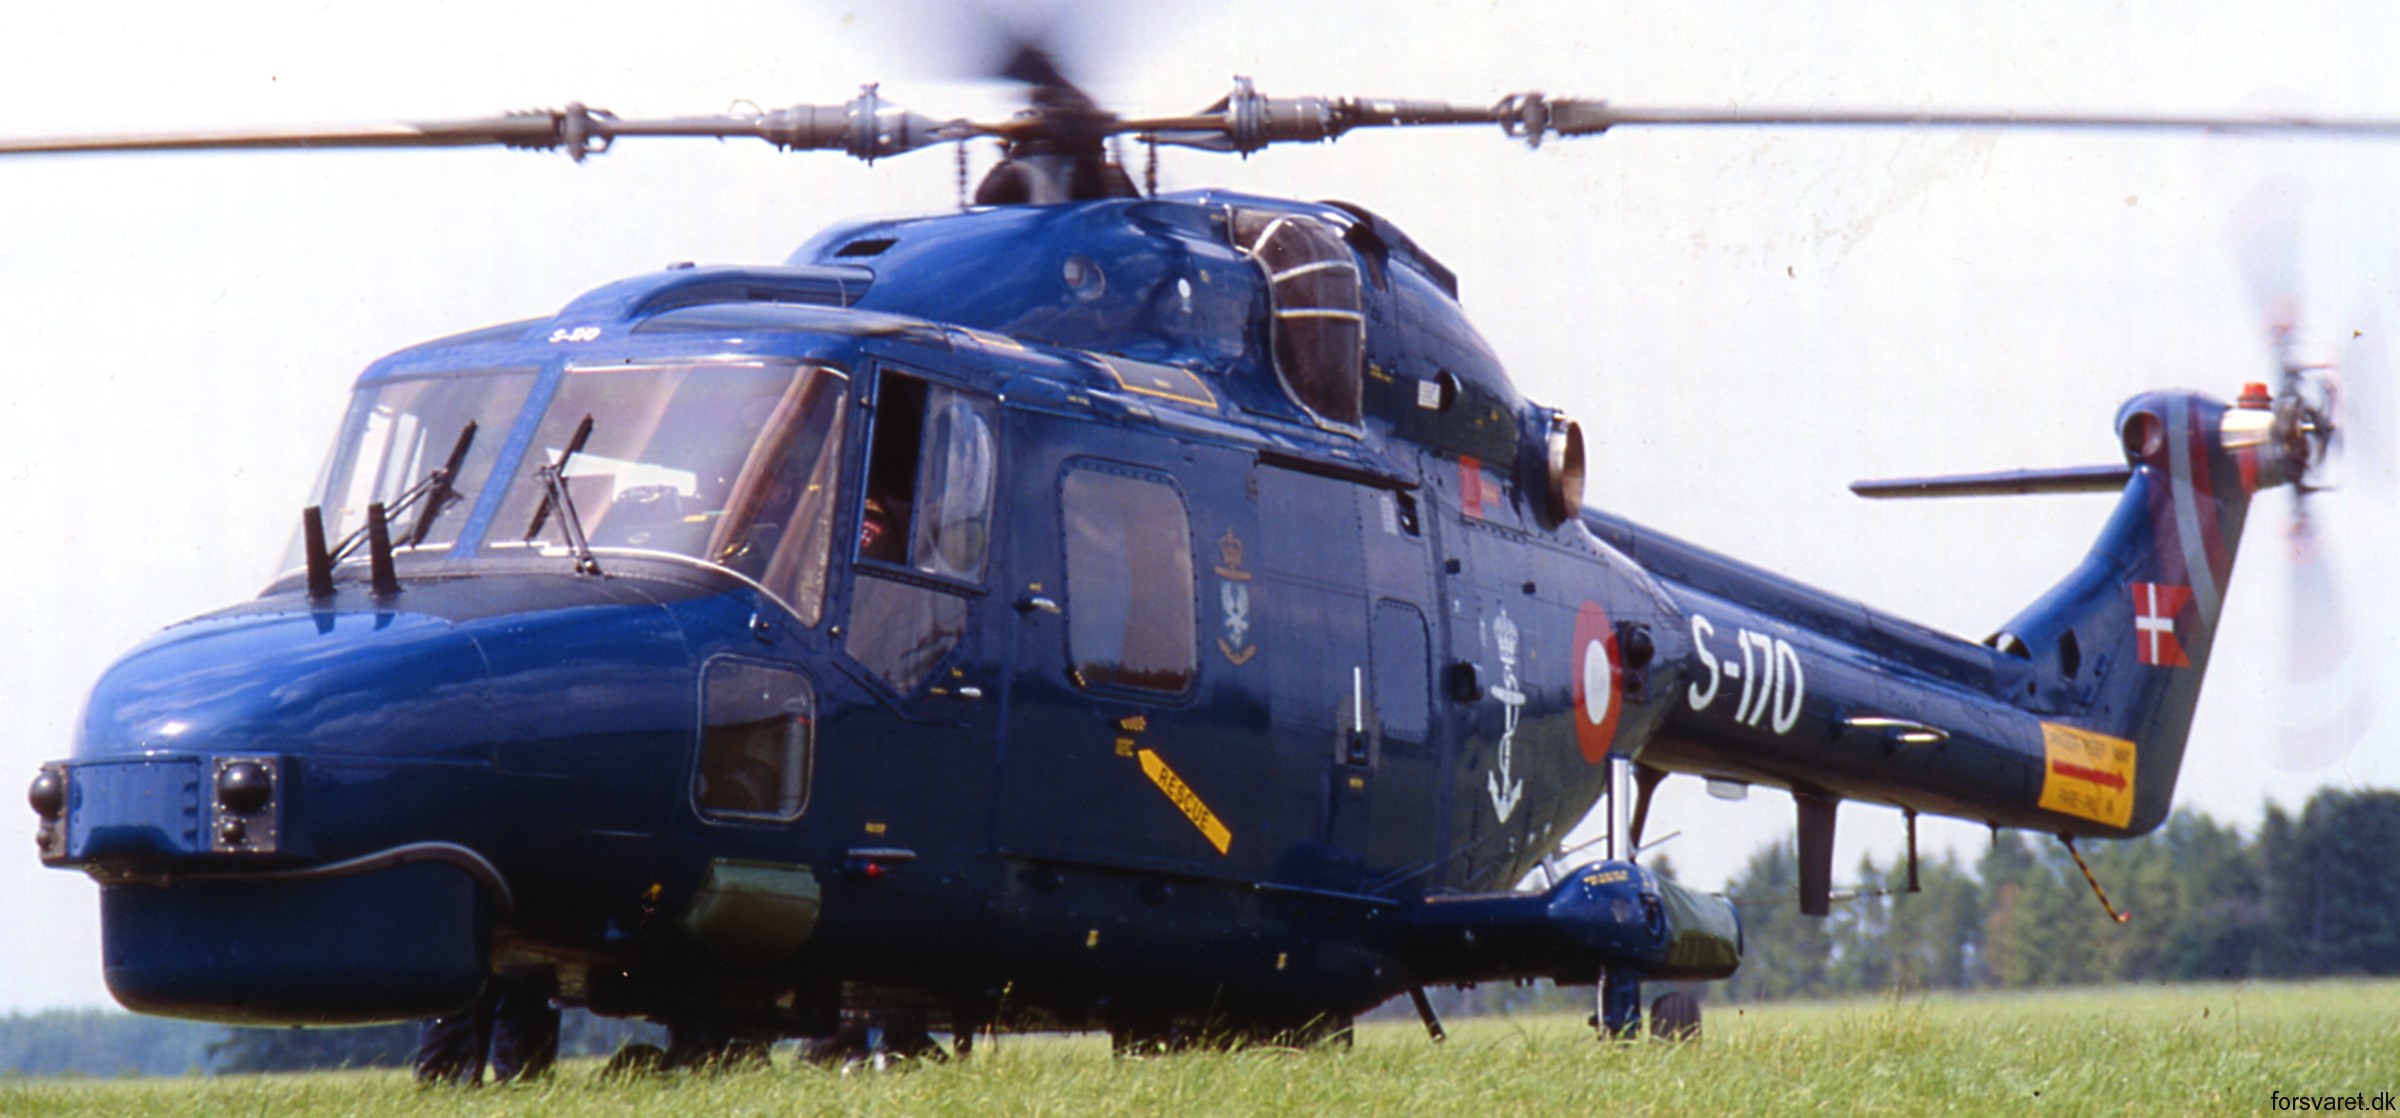 lynx mk.80 mk.90b helicopter westland royal danish navy air force kongelige danske marine flyvevabnet s-170 16